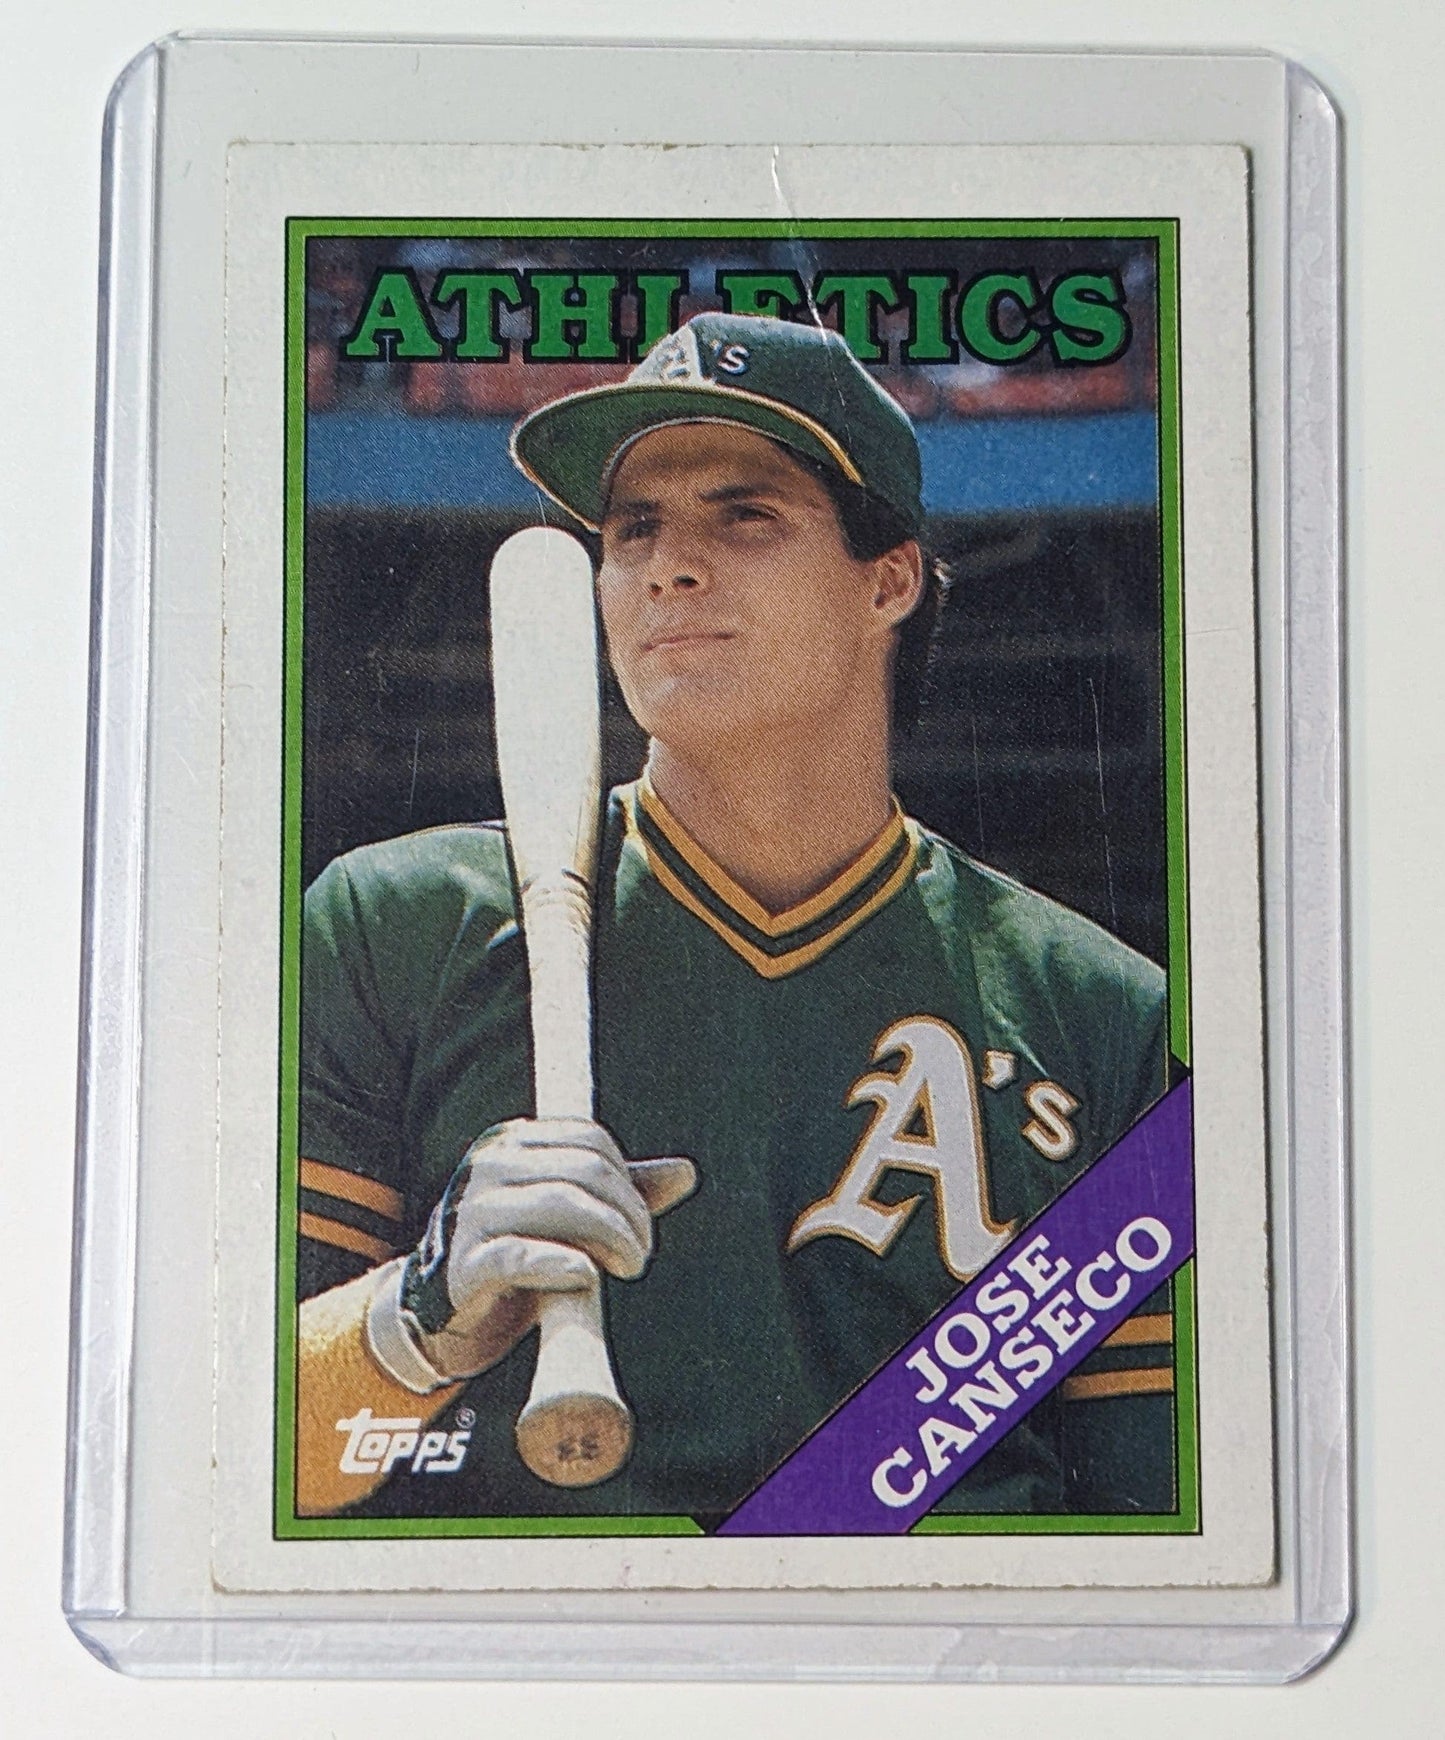 FIINR Baseball Card 1988 Topps Jose Canseco Baseball Card #370 - Mint Condition